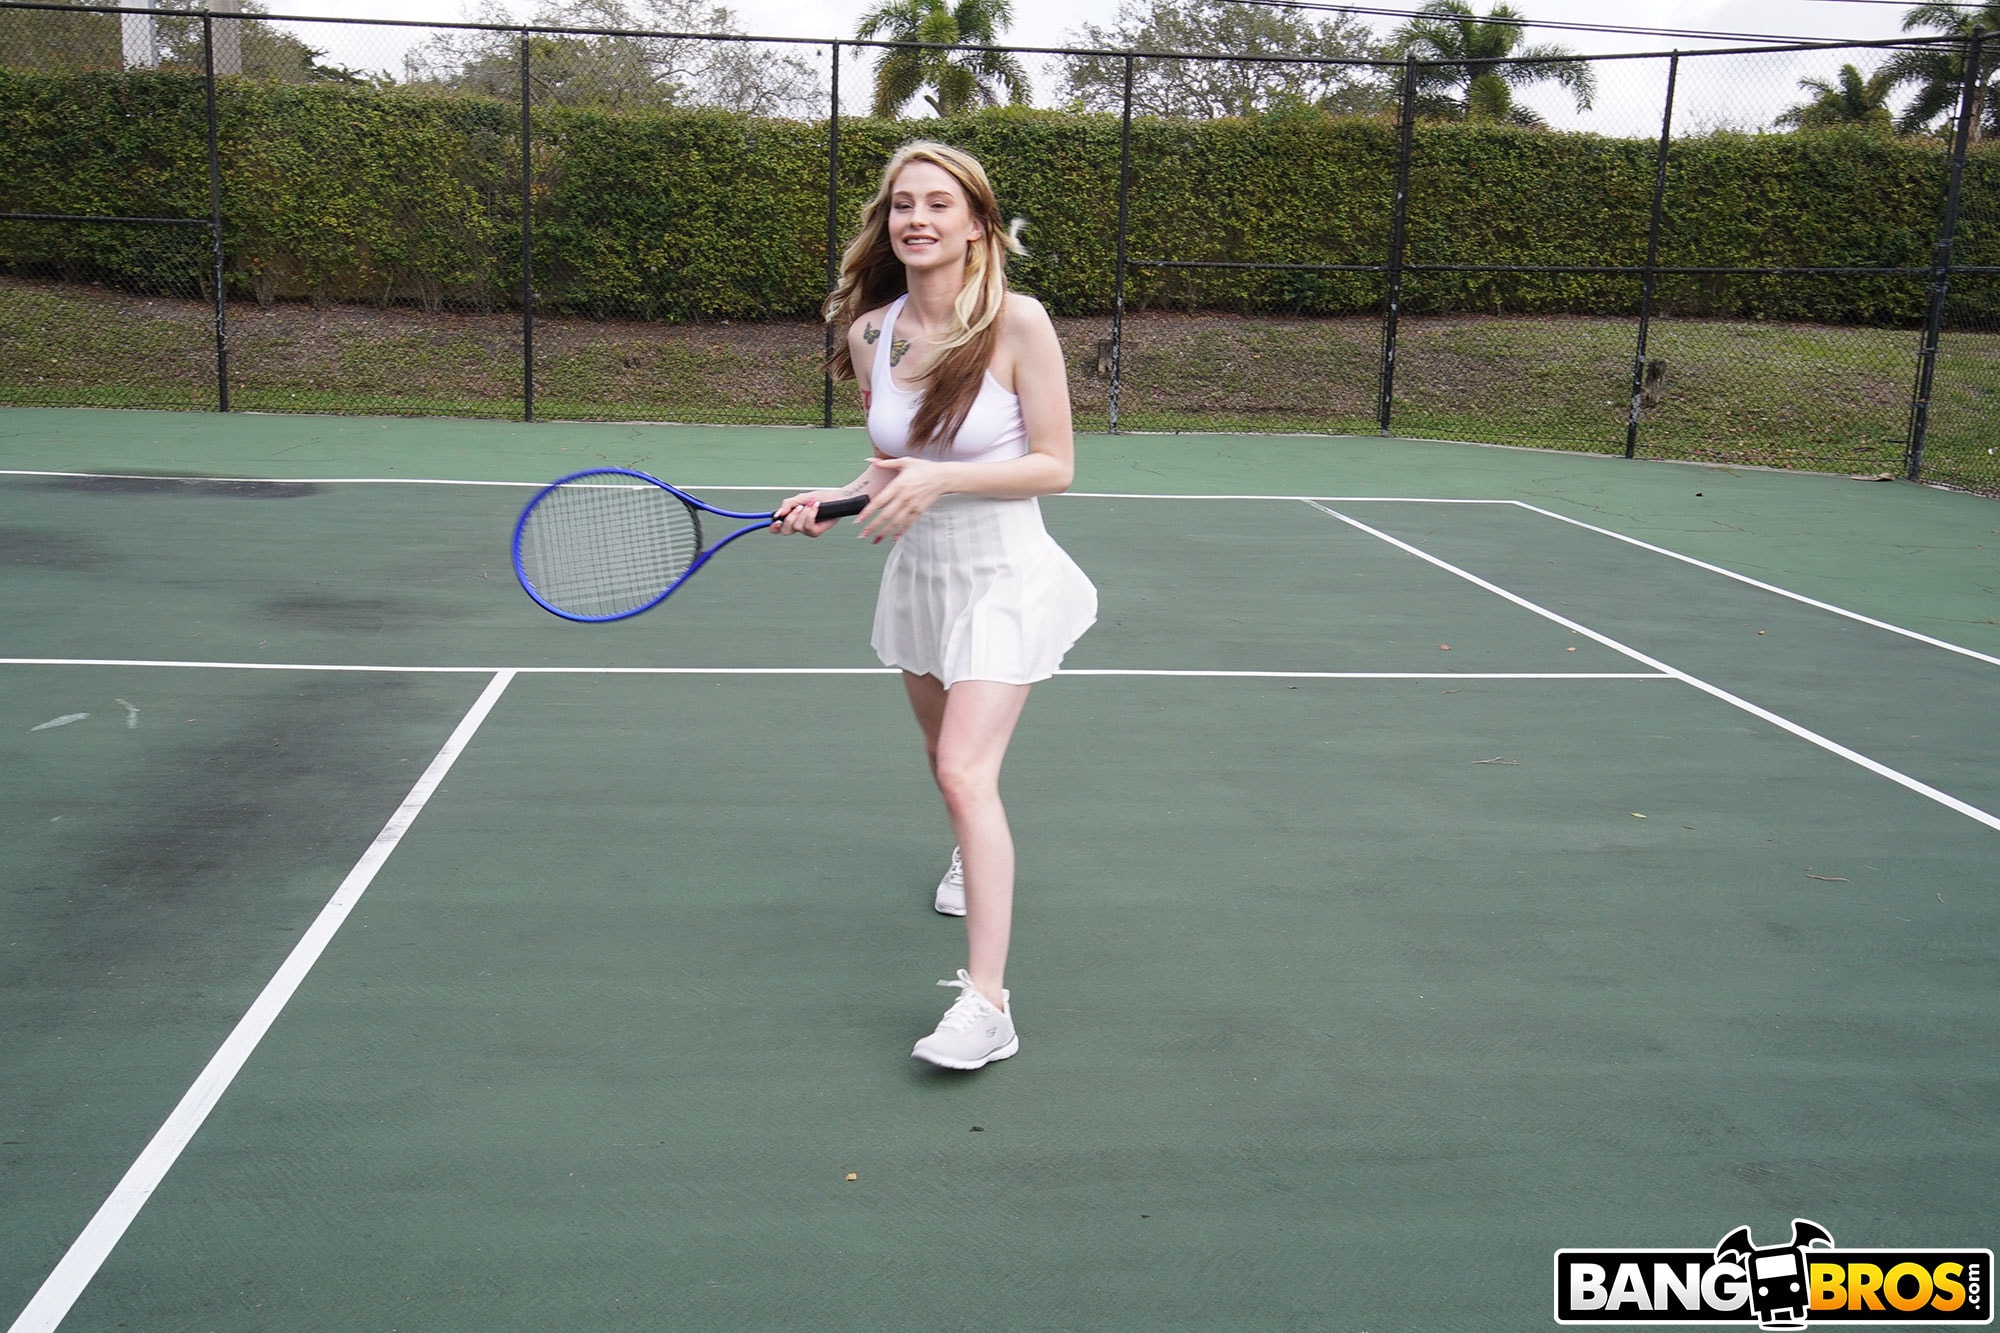 Bangbros 'Tennis Fuck Session' starring Kimberly Snow (Photo 54)